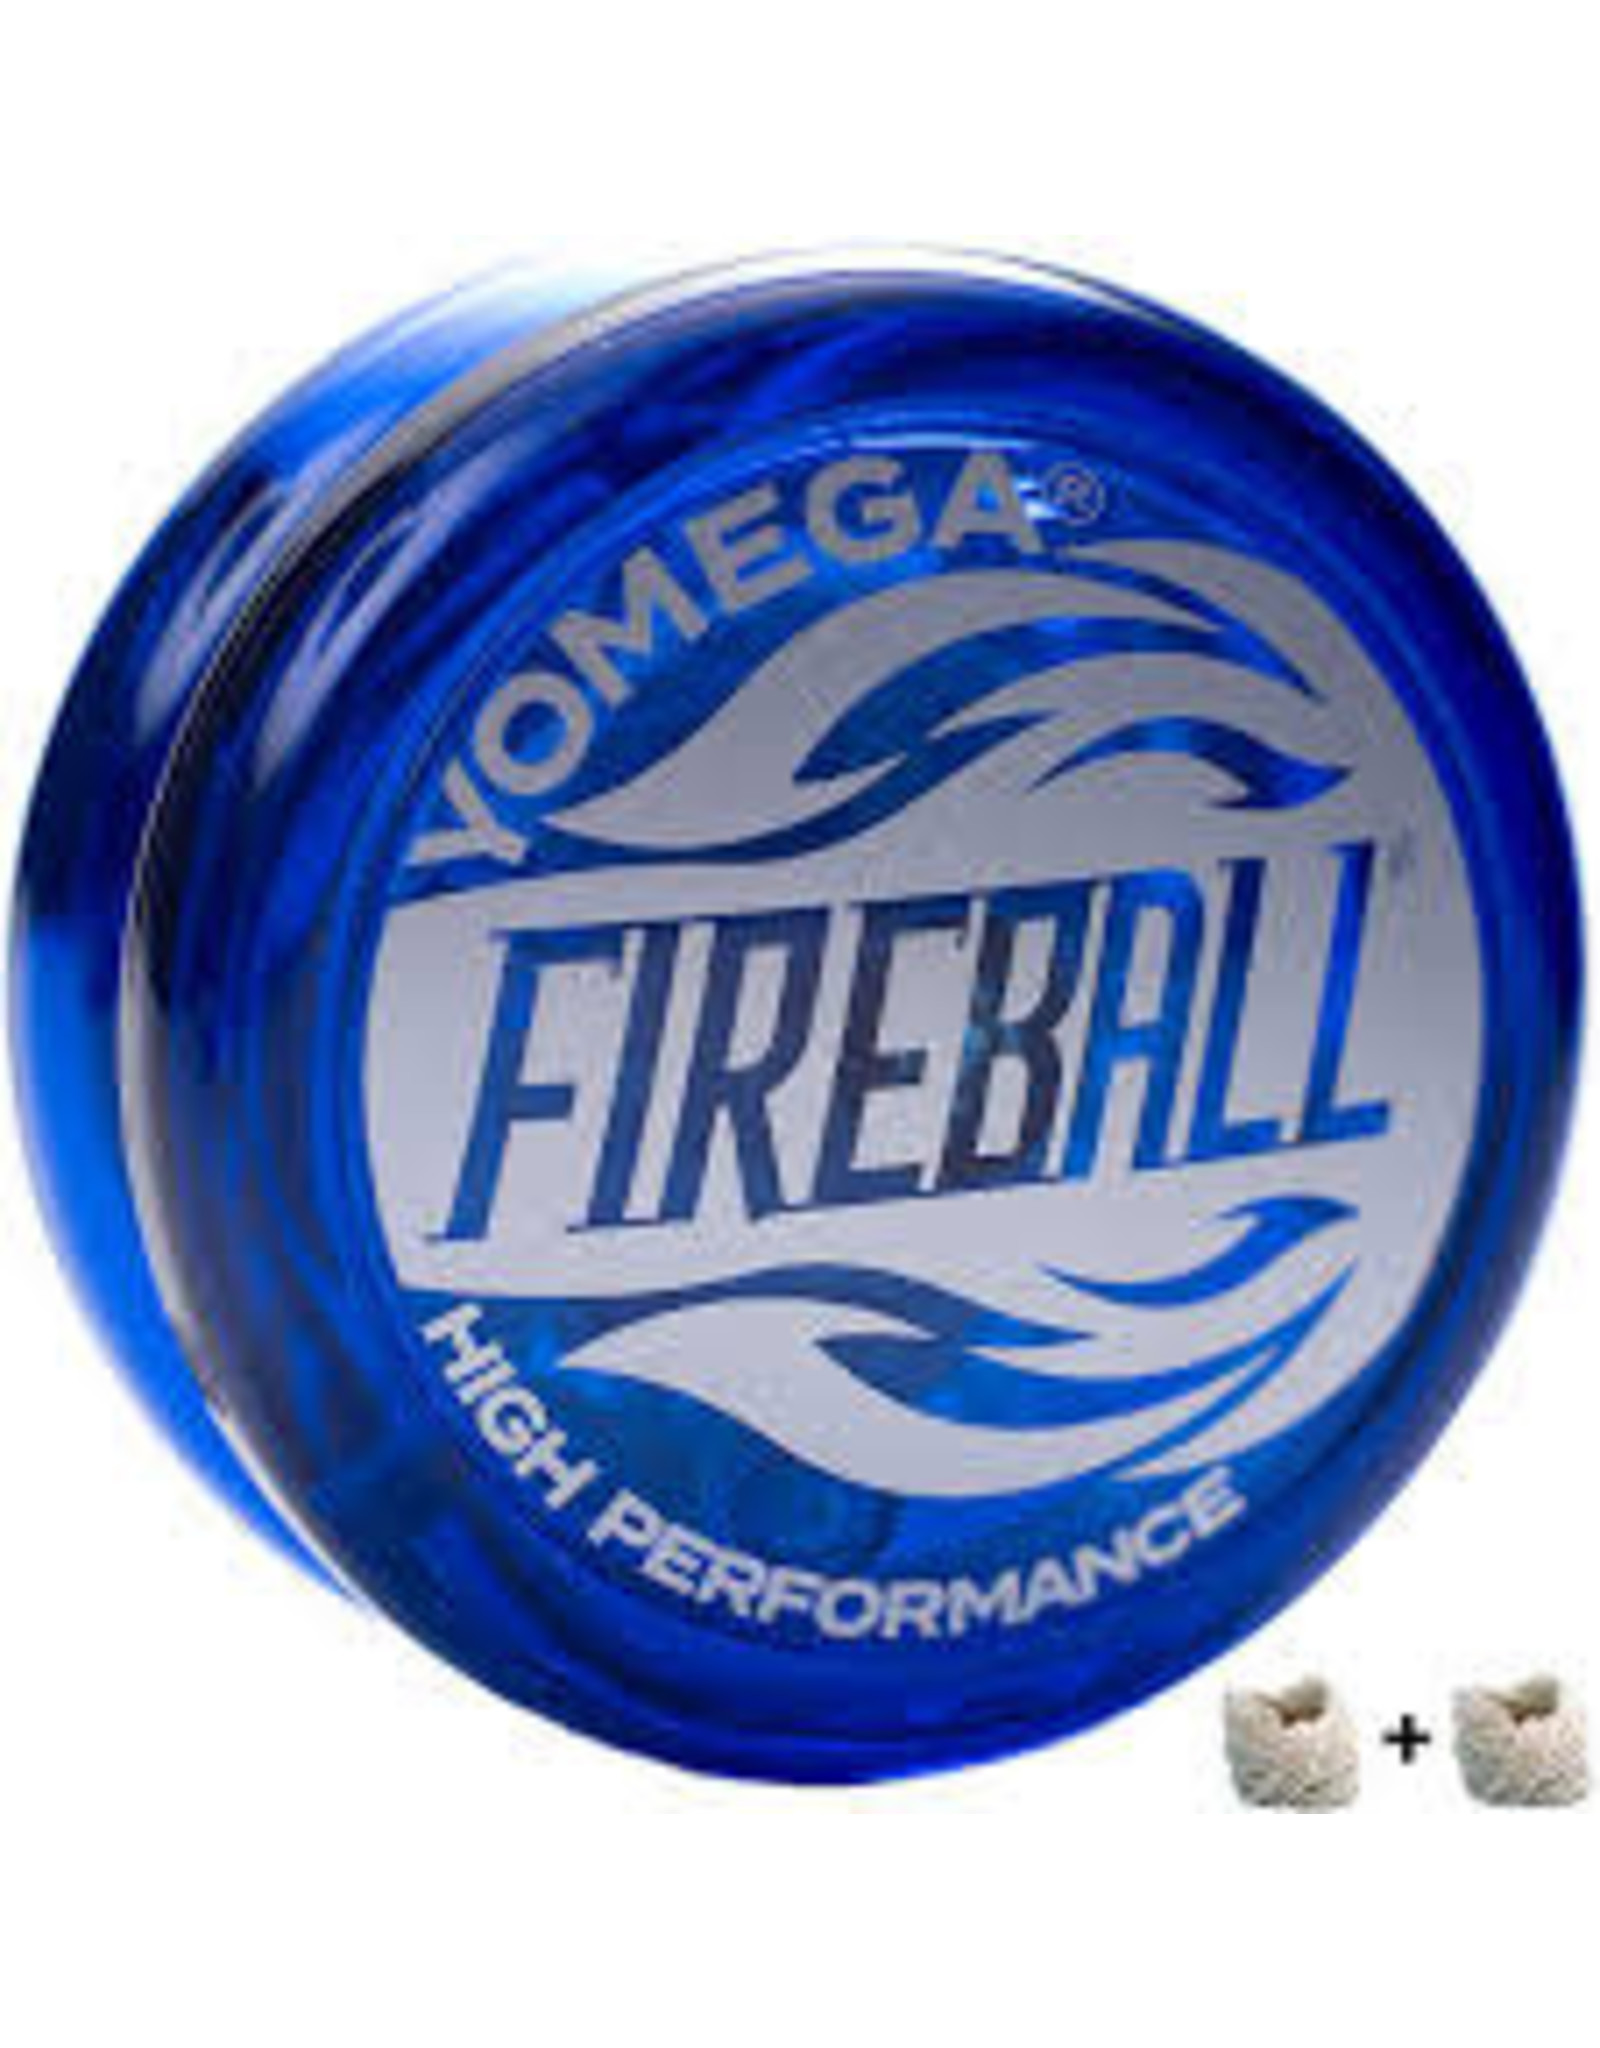 Yomega Fireball